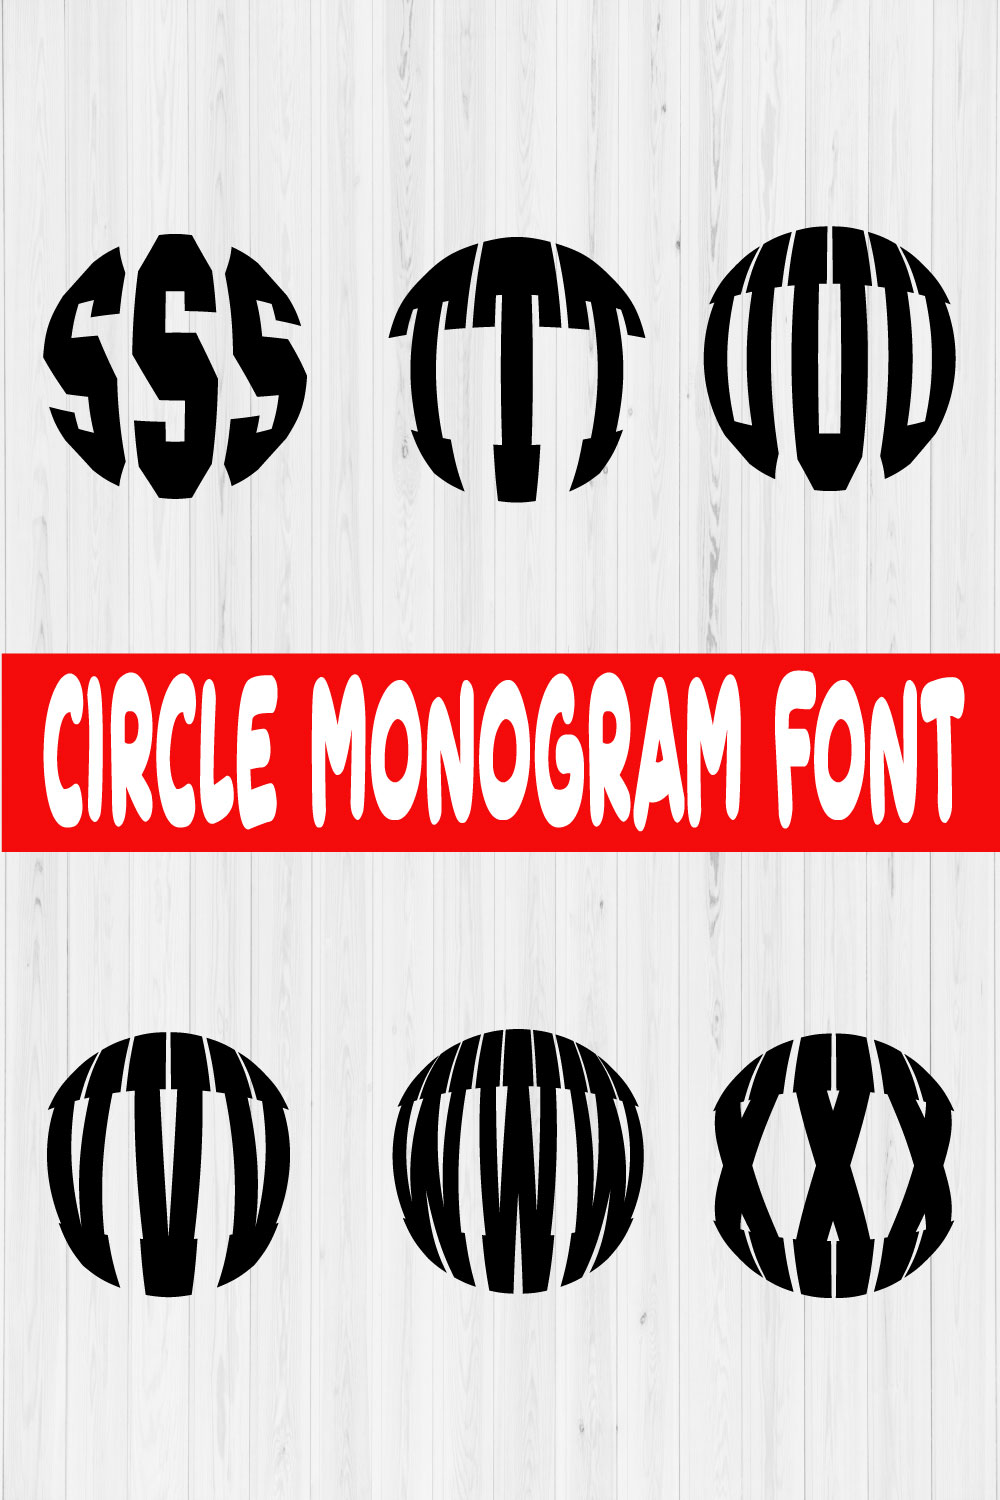 Circle Monogram Font Vol4 pinterest preview image.